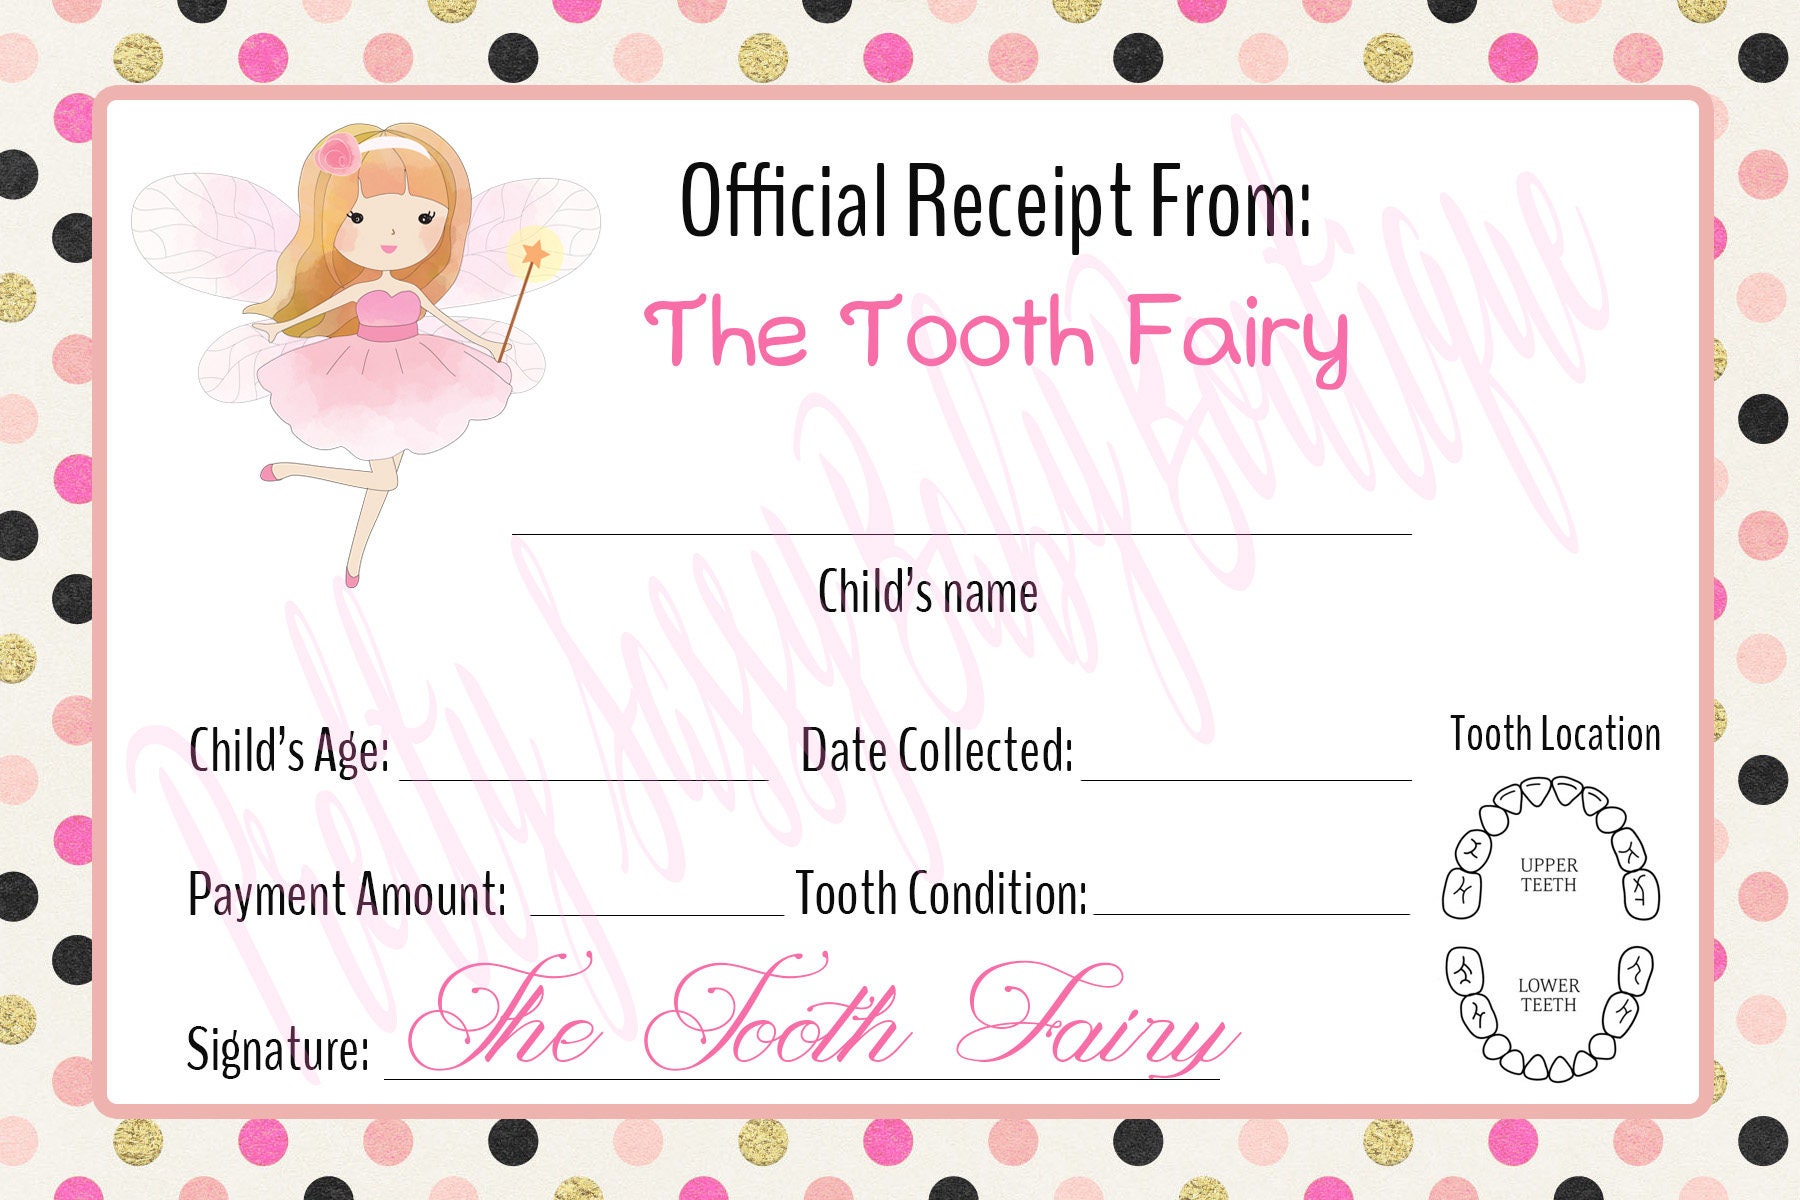 toothfairy receipt